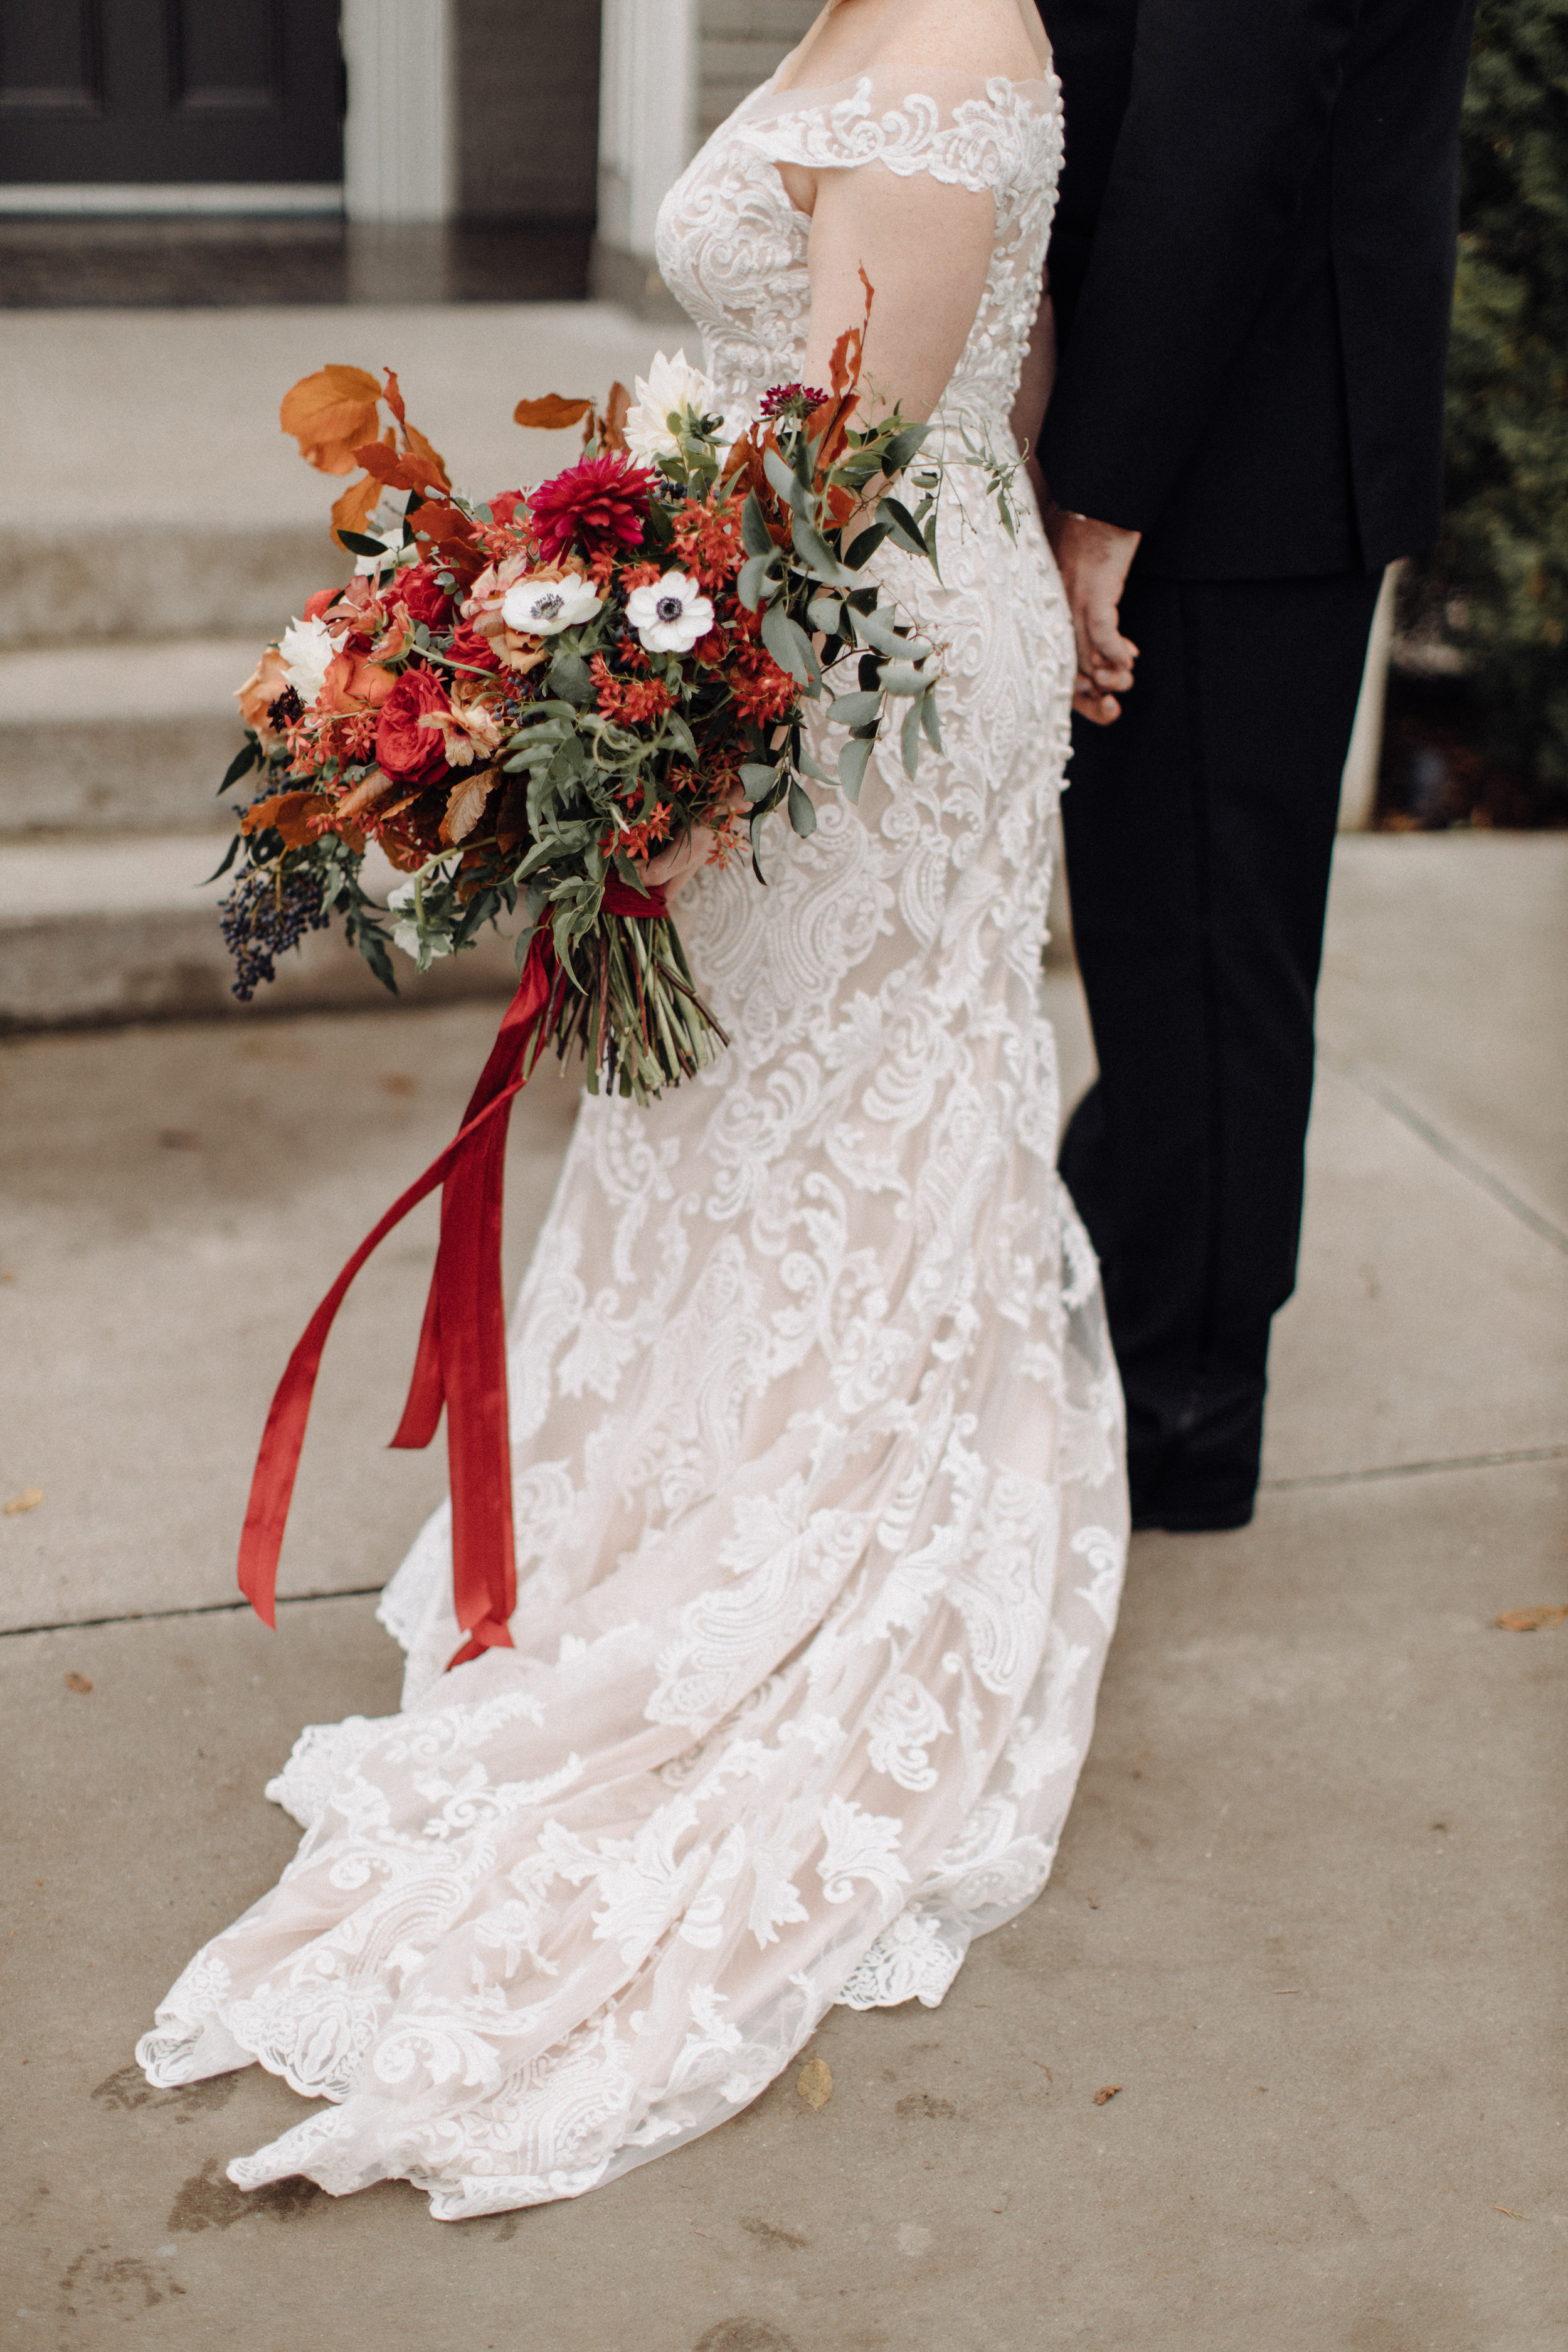 Lush bridal bouquet with autumn foliage, anemones, dahlias, and garden roses. Nashville Wedding Floral Design.